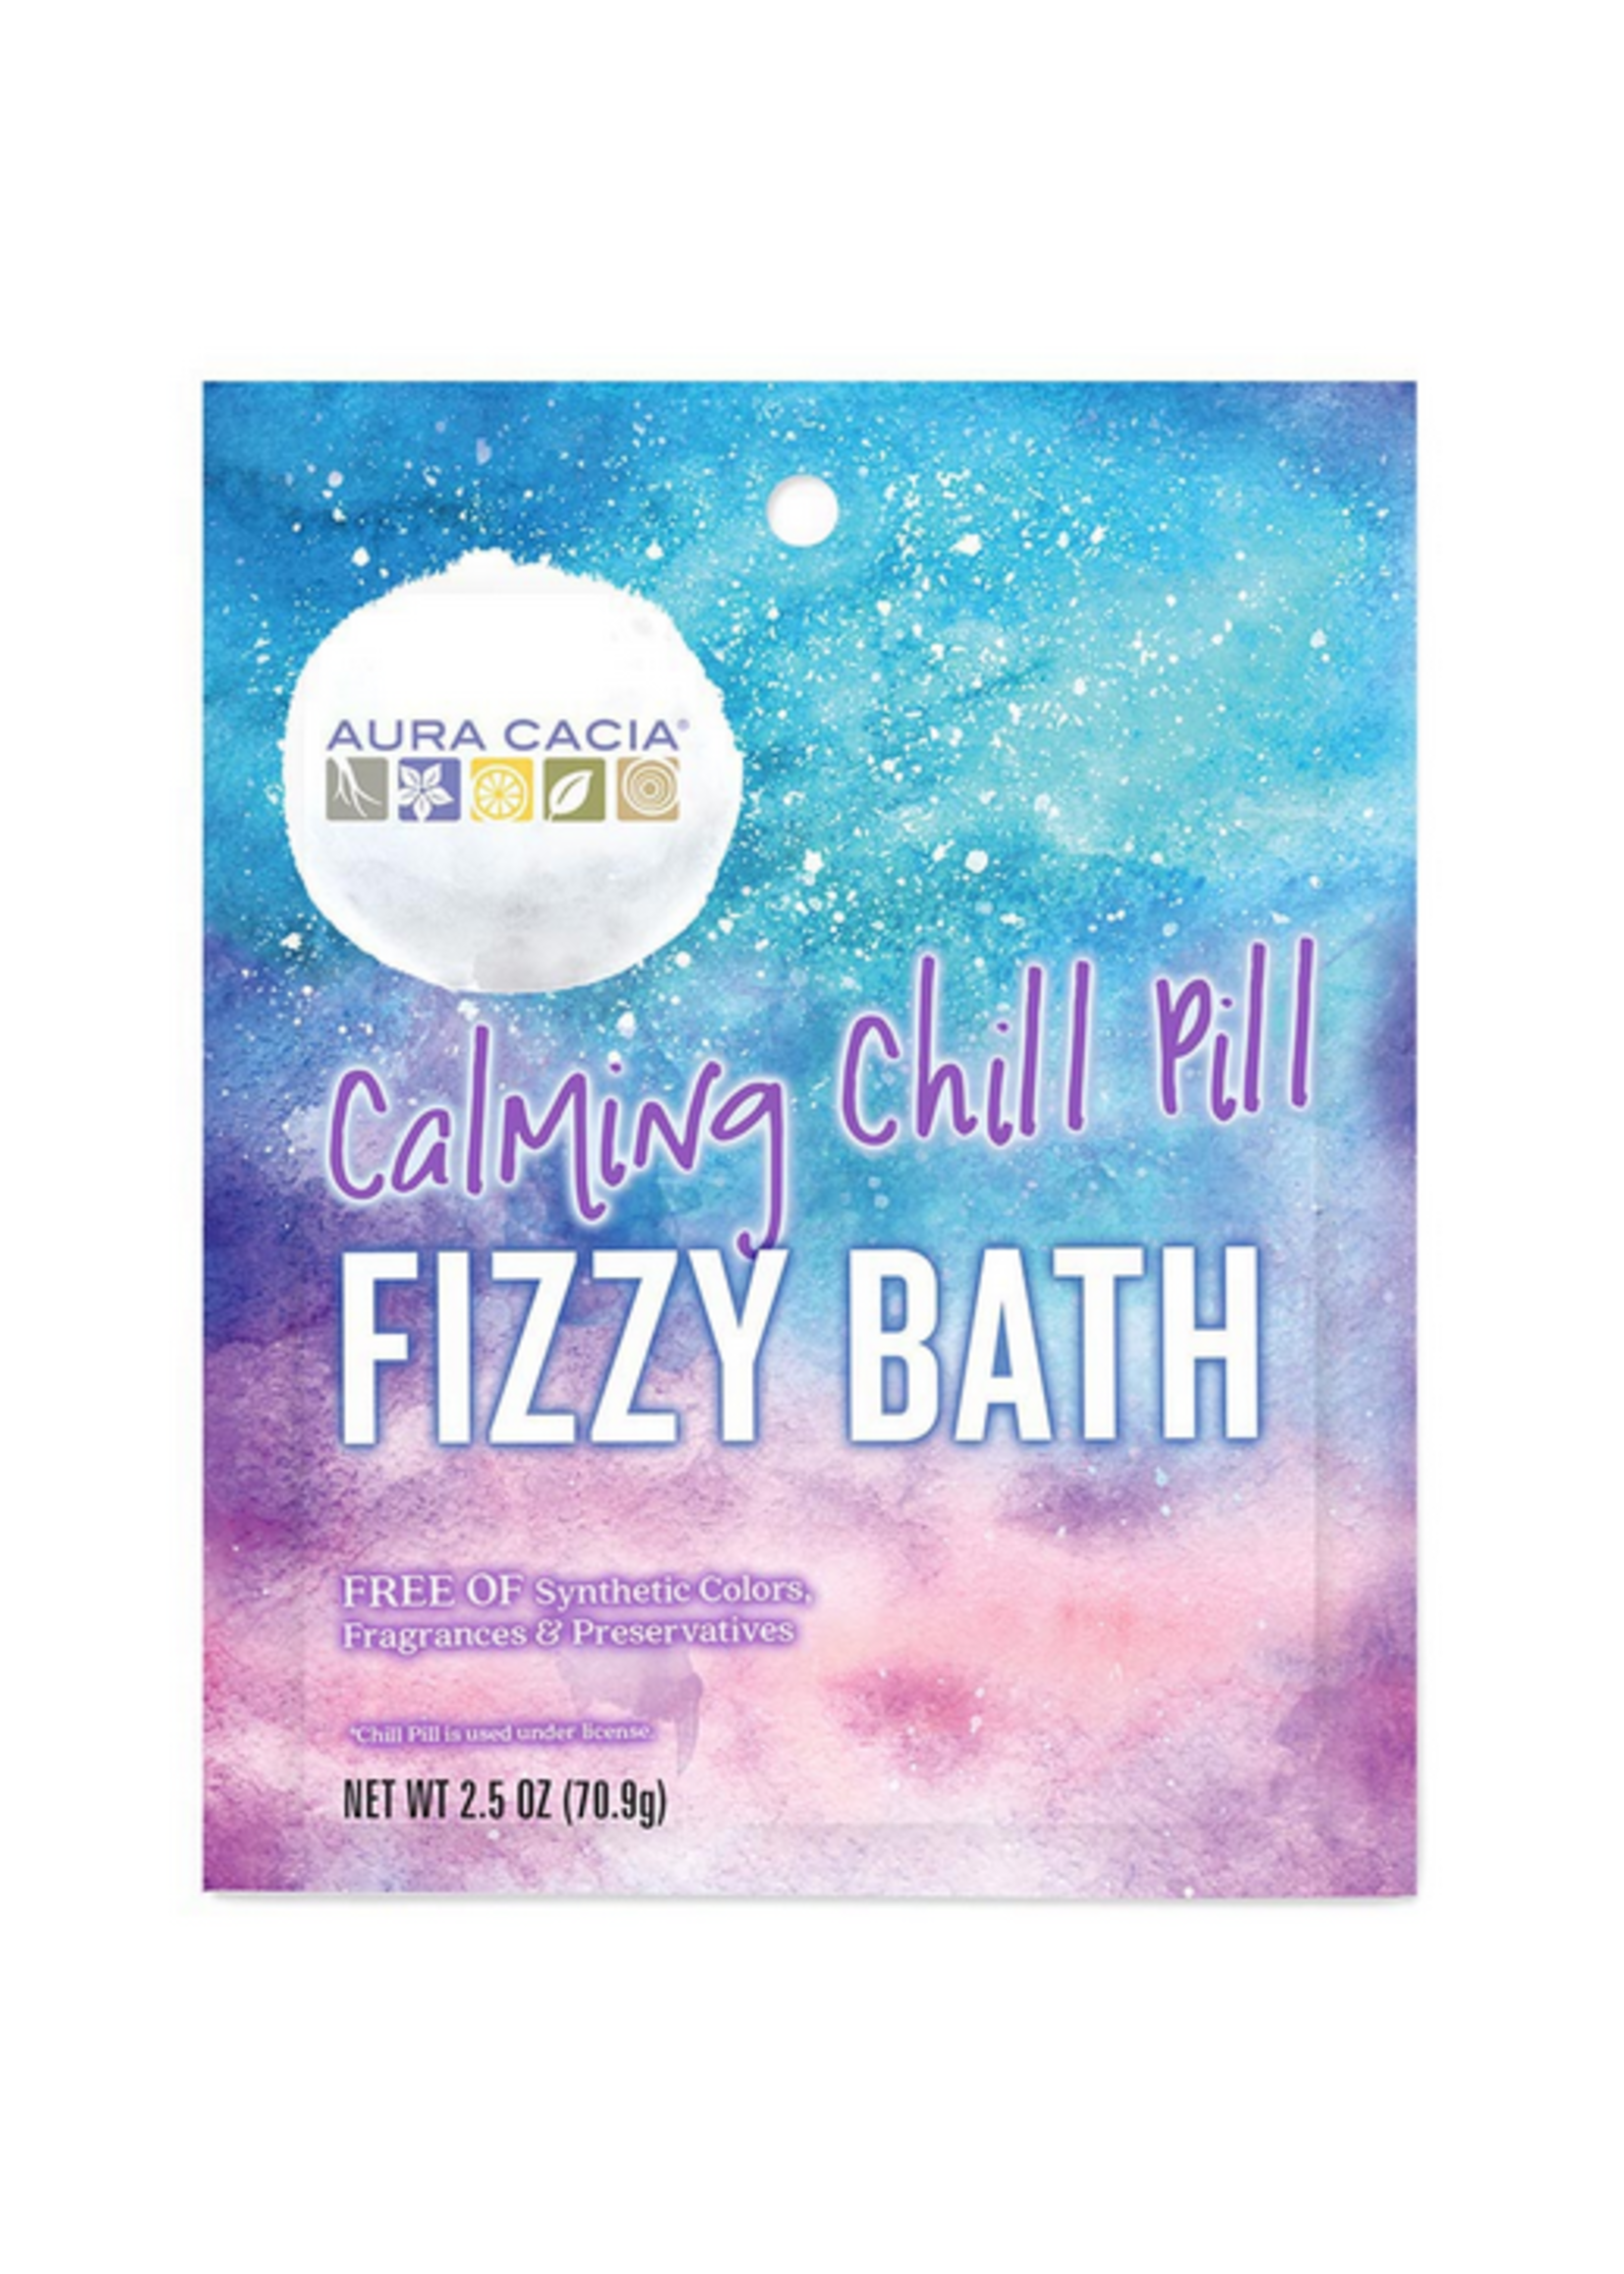 Aura Cacia Fizzy Bath - Chill Pill